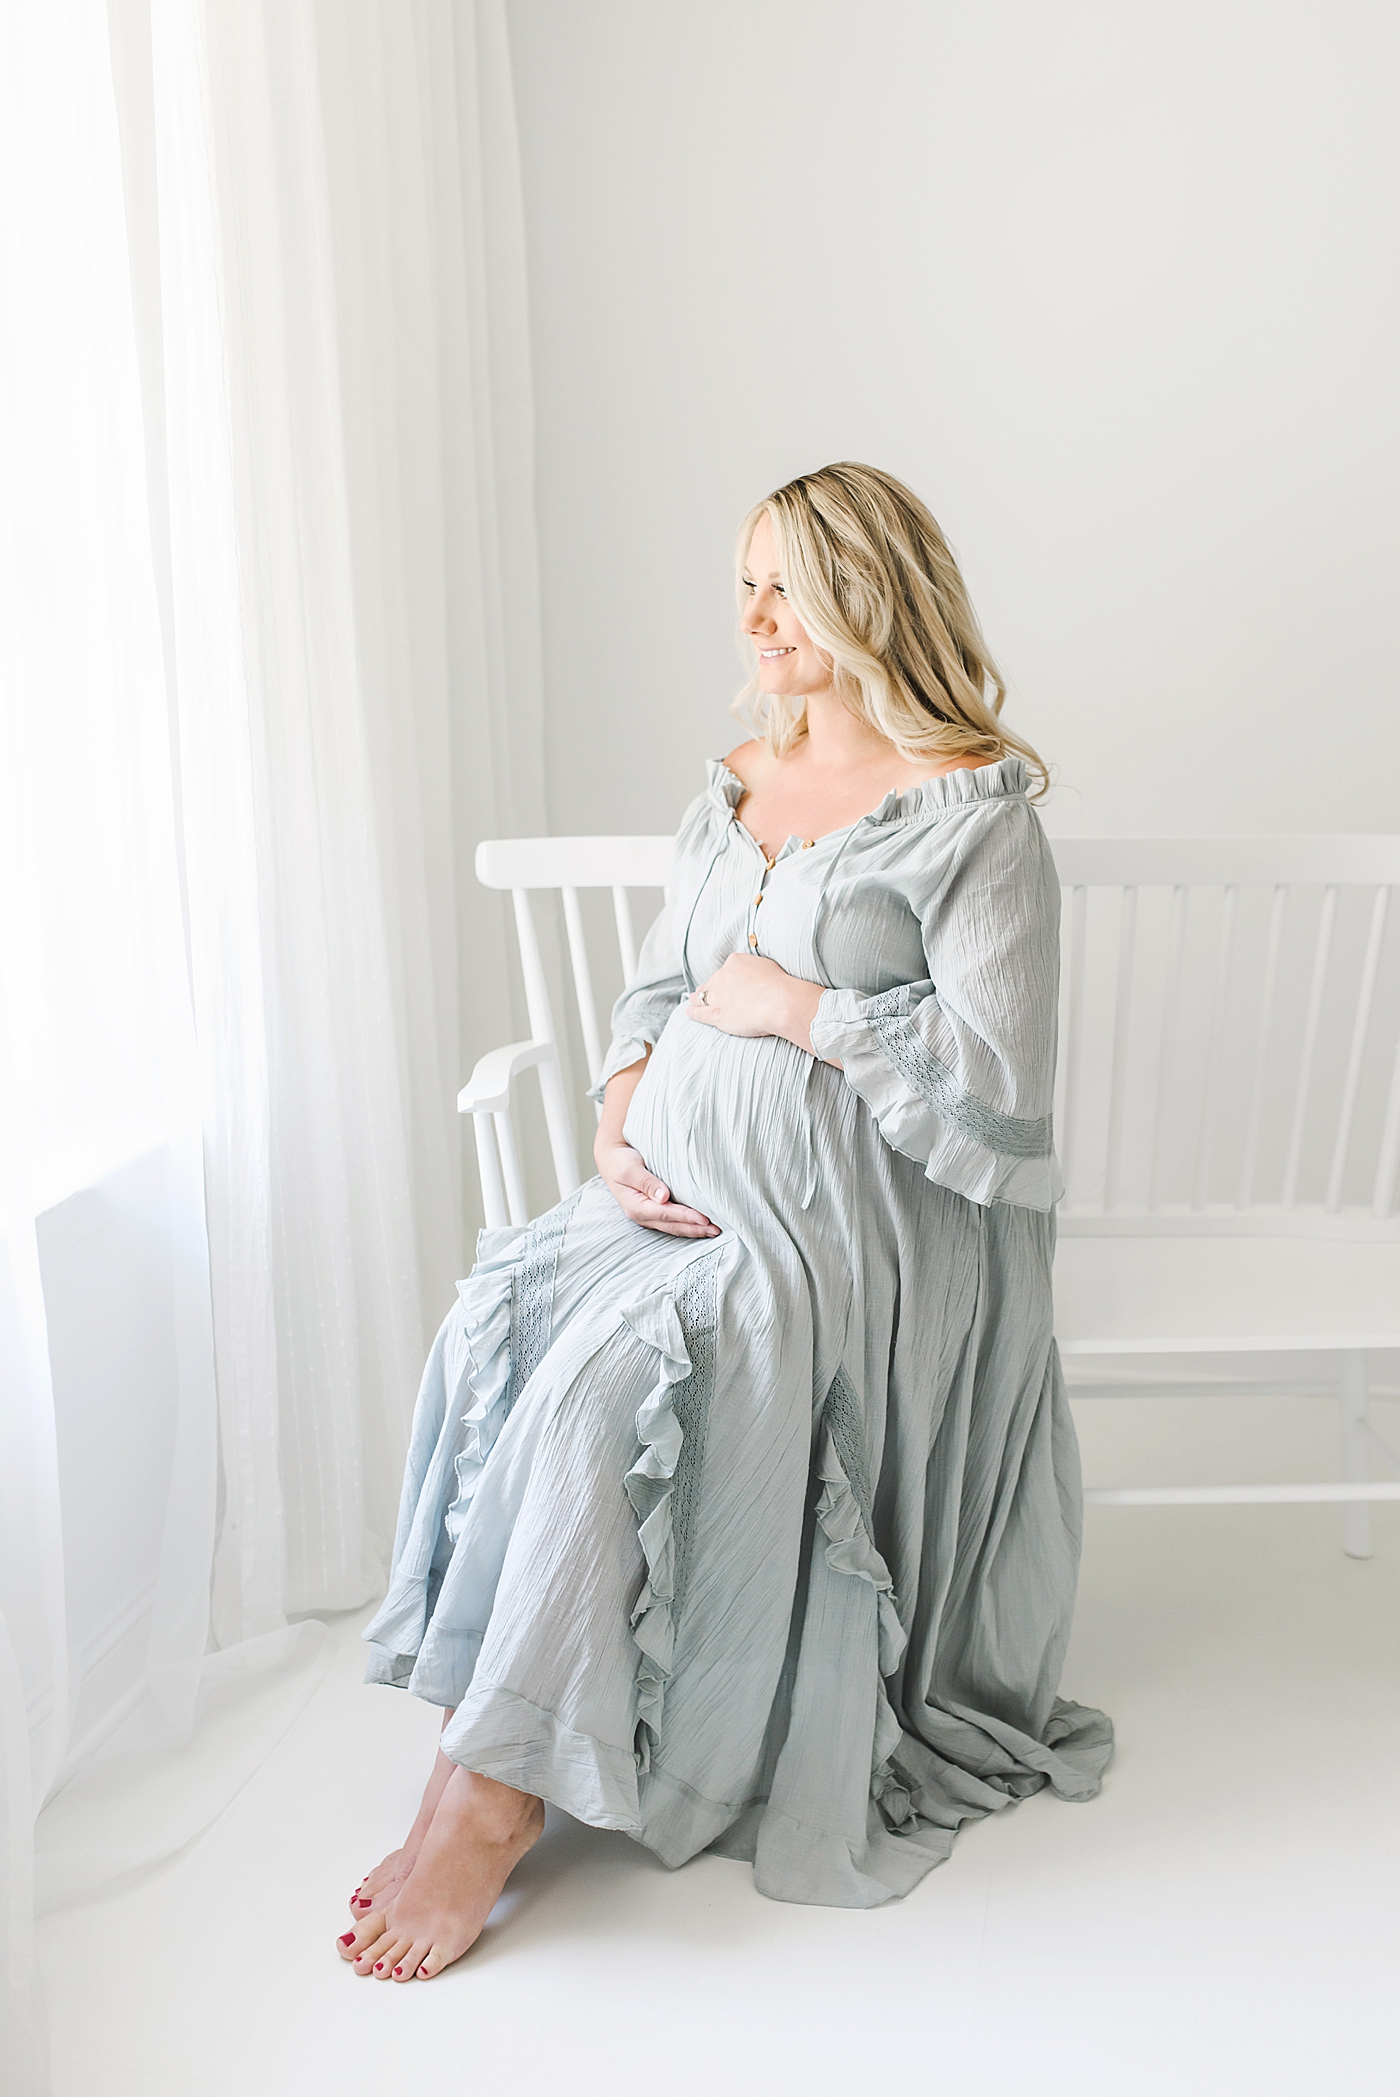 Pregnant woman in blue dress sitting on white bench | Photo by Huntersville Newborn Photographer Anna Wisjo 